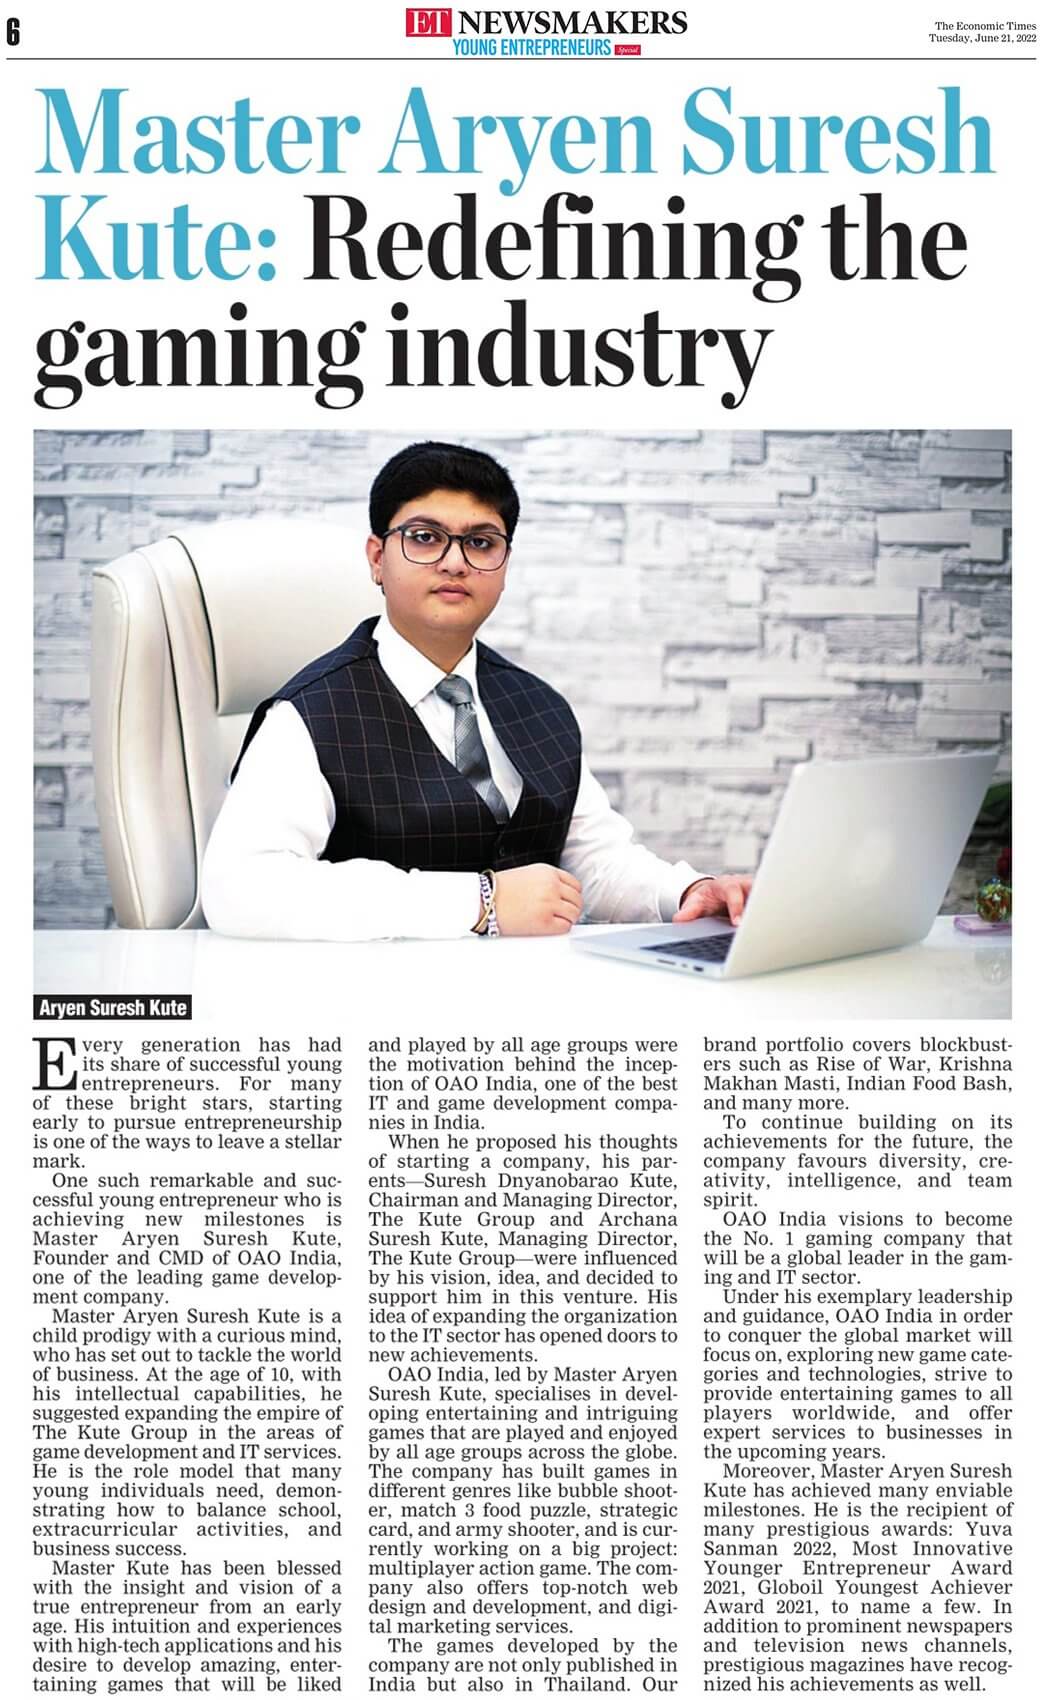 Master Aryen Suresh Kute - Redefining The Gaming Industry